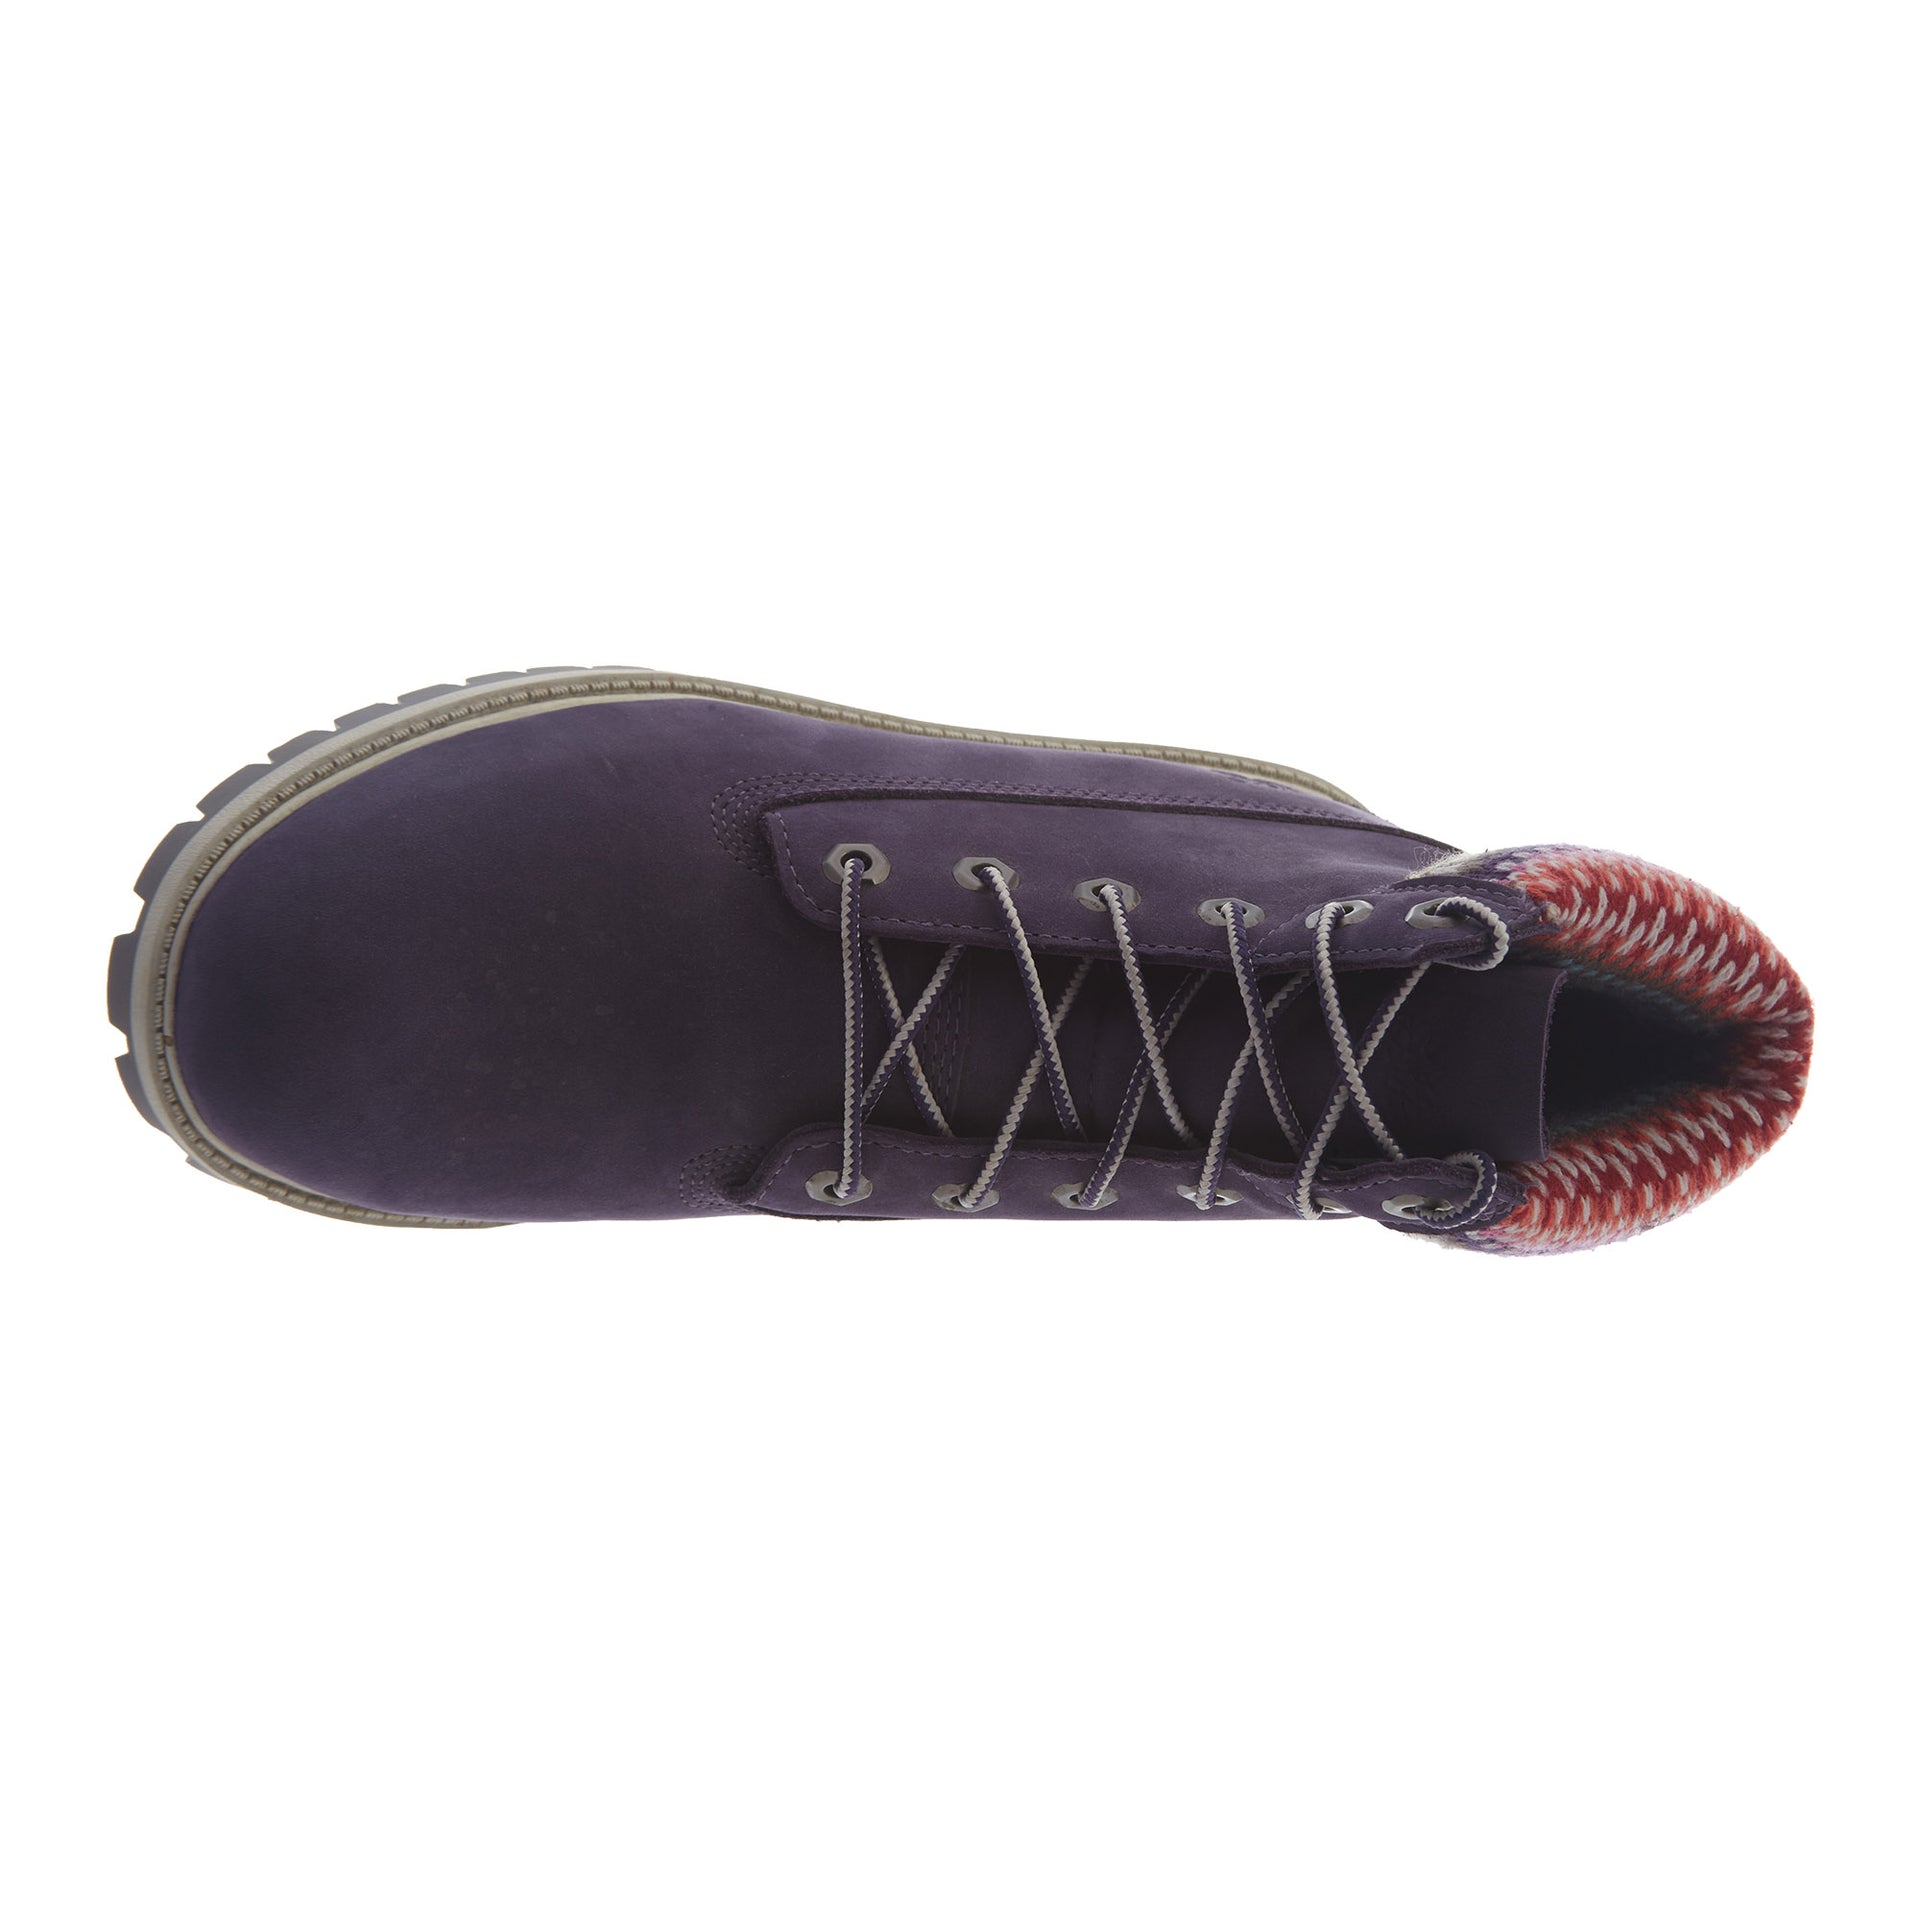 Timberland 6 Inch Premium Waterproof Boots Big Kids Style : Tb09595r